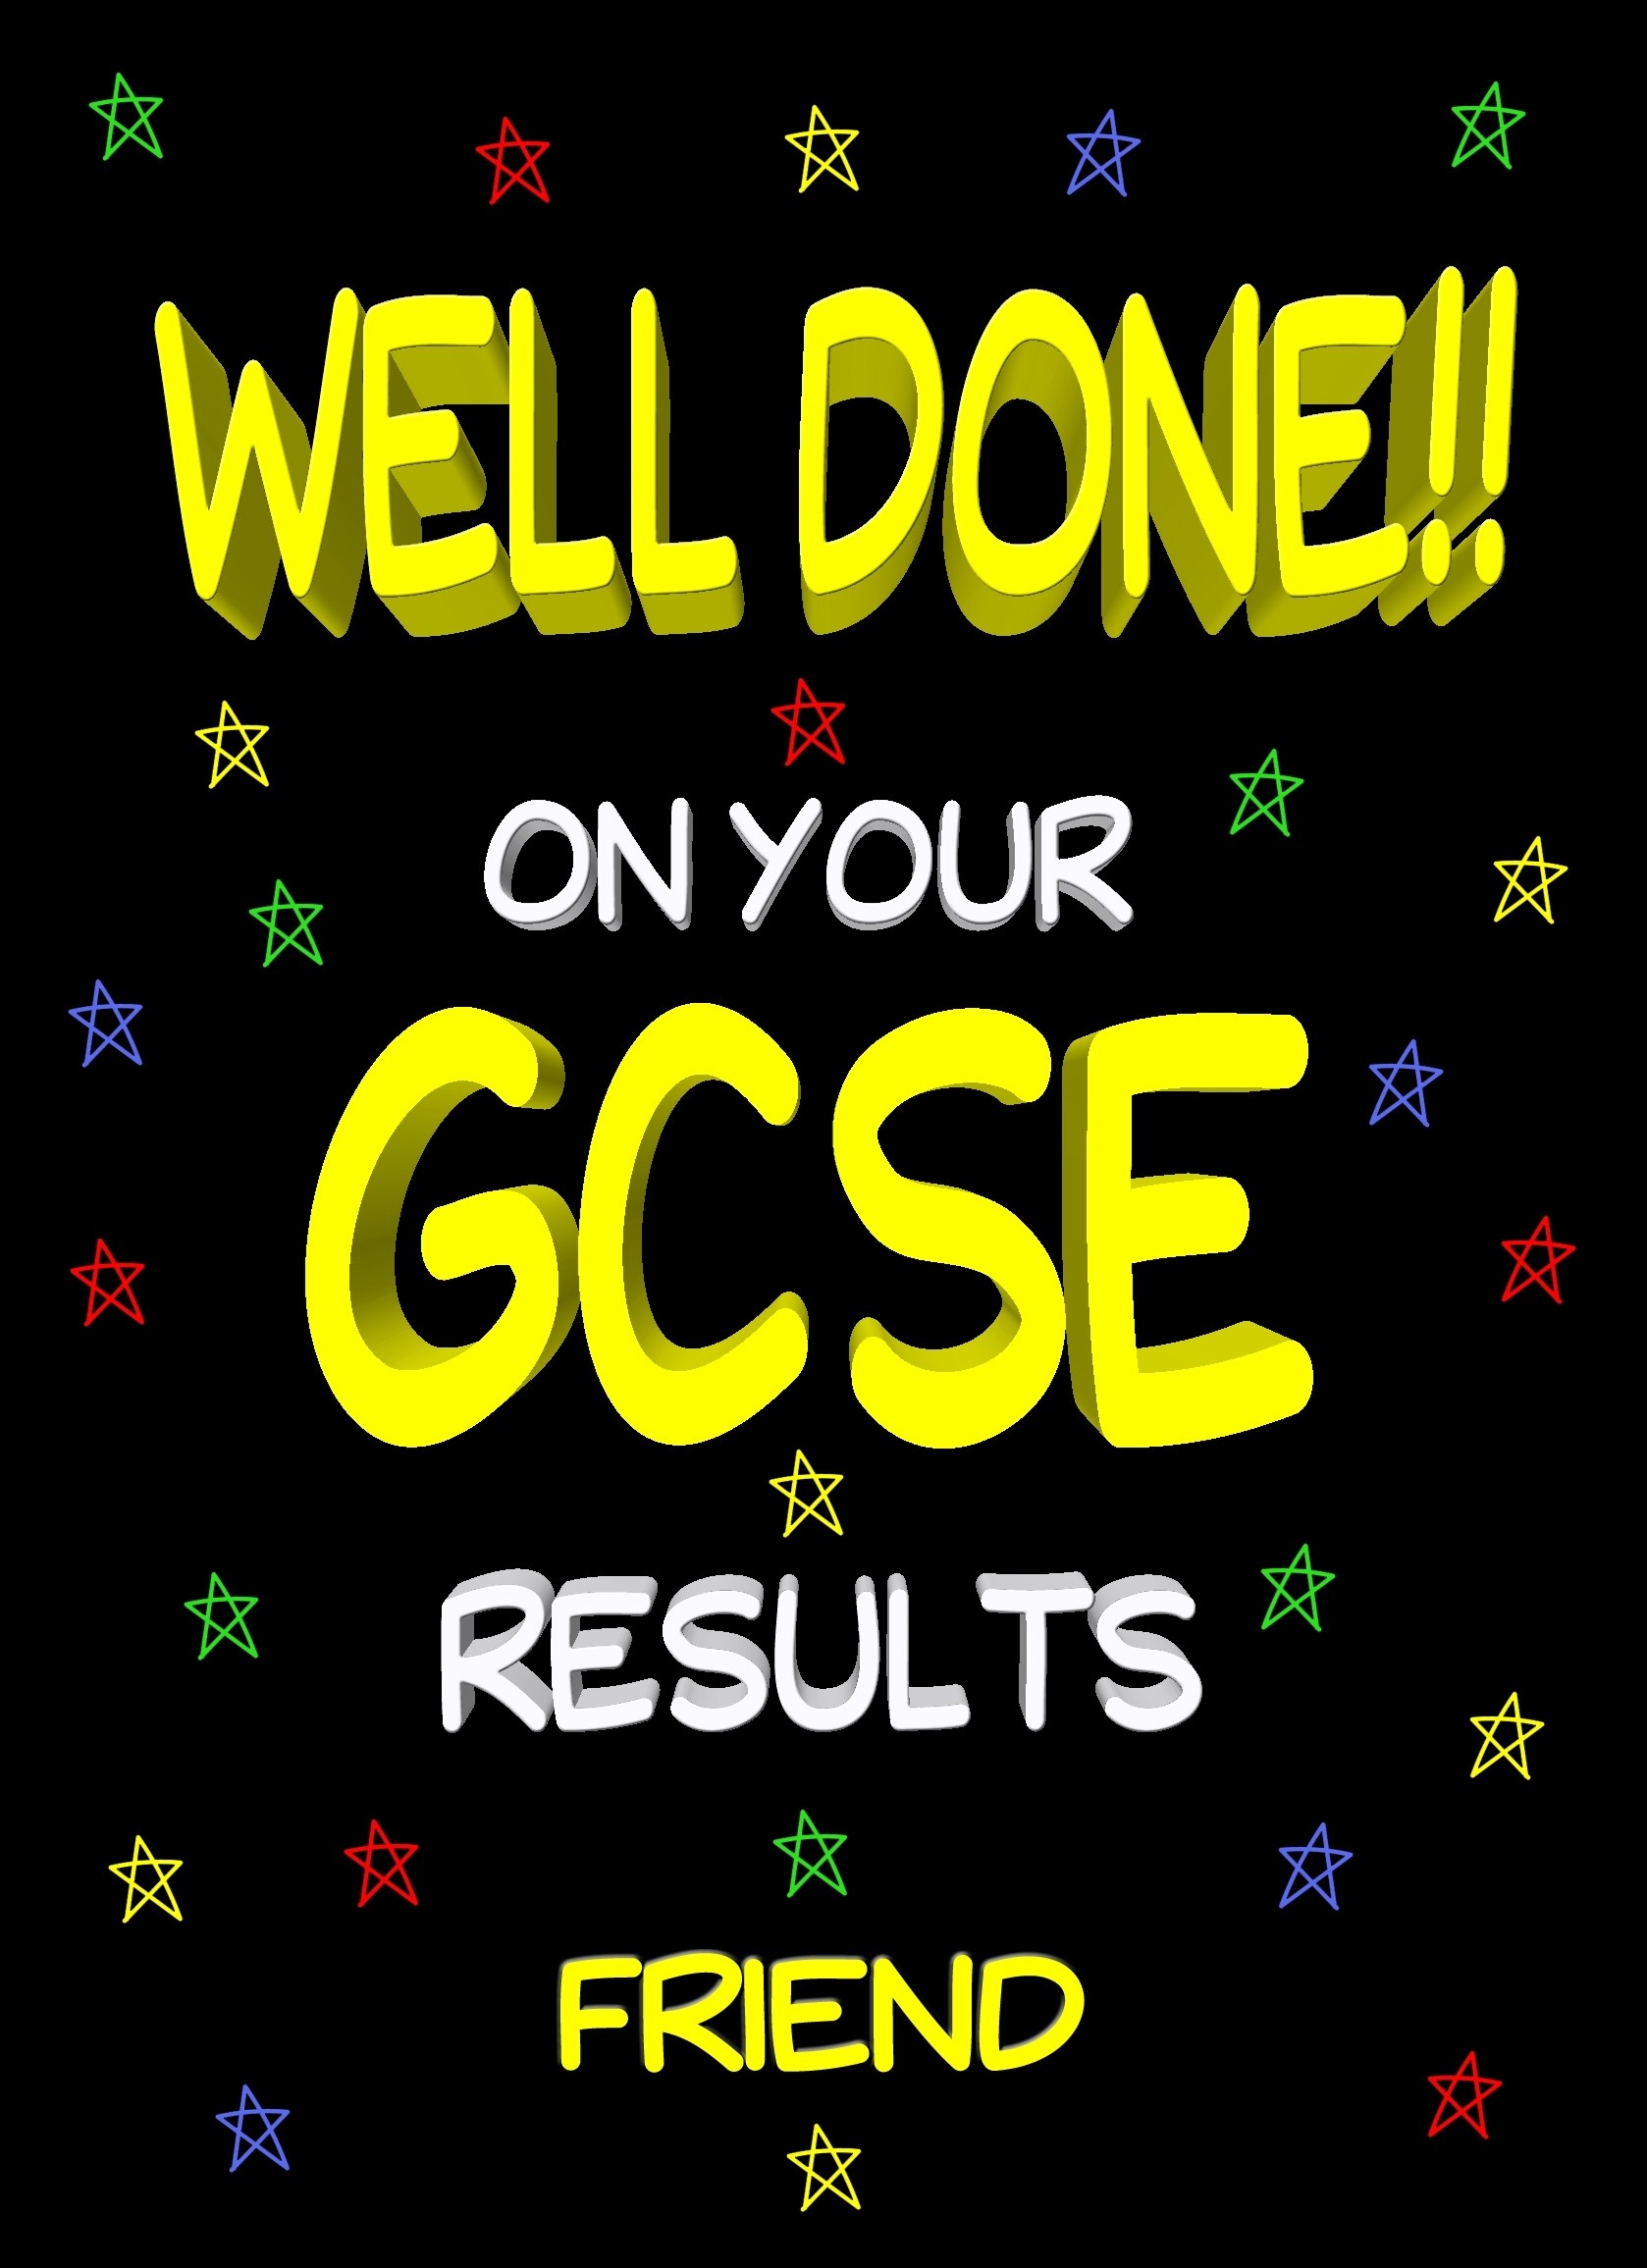 Congratulations GCSE Passing Exams Card For Friend (Design 2)